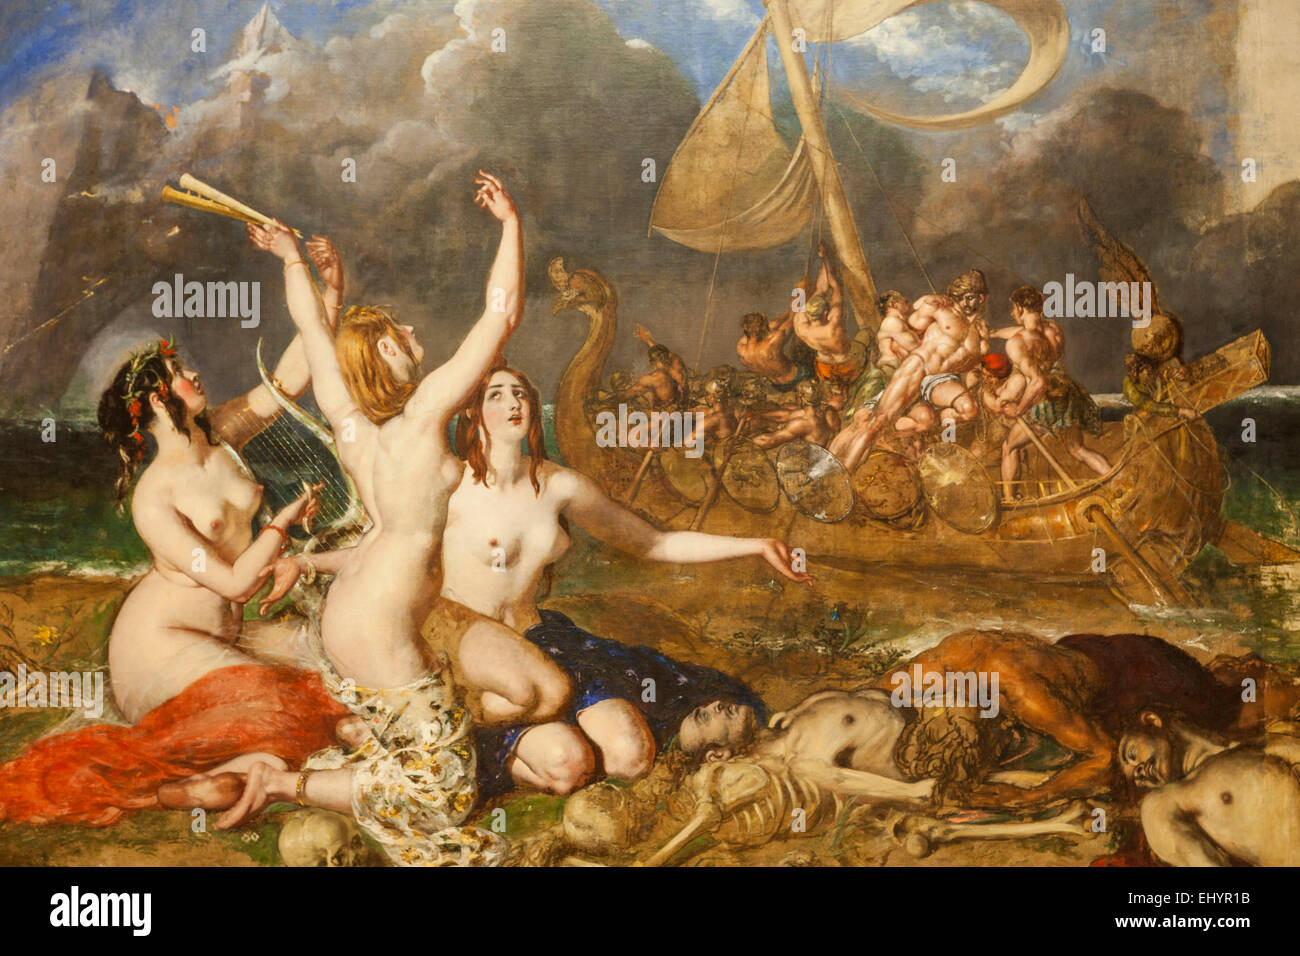 Siren mythology hi-res stock photography and images - Alamy